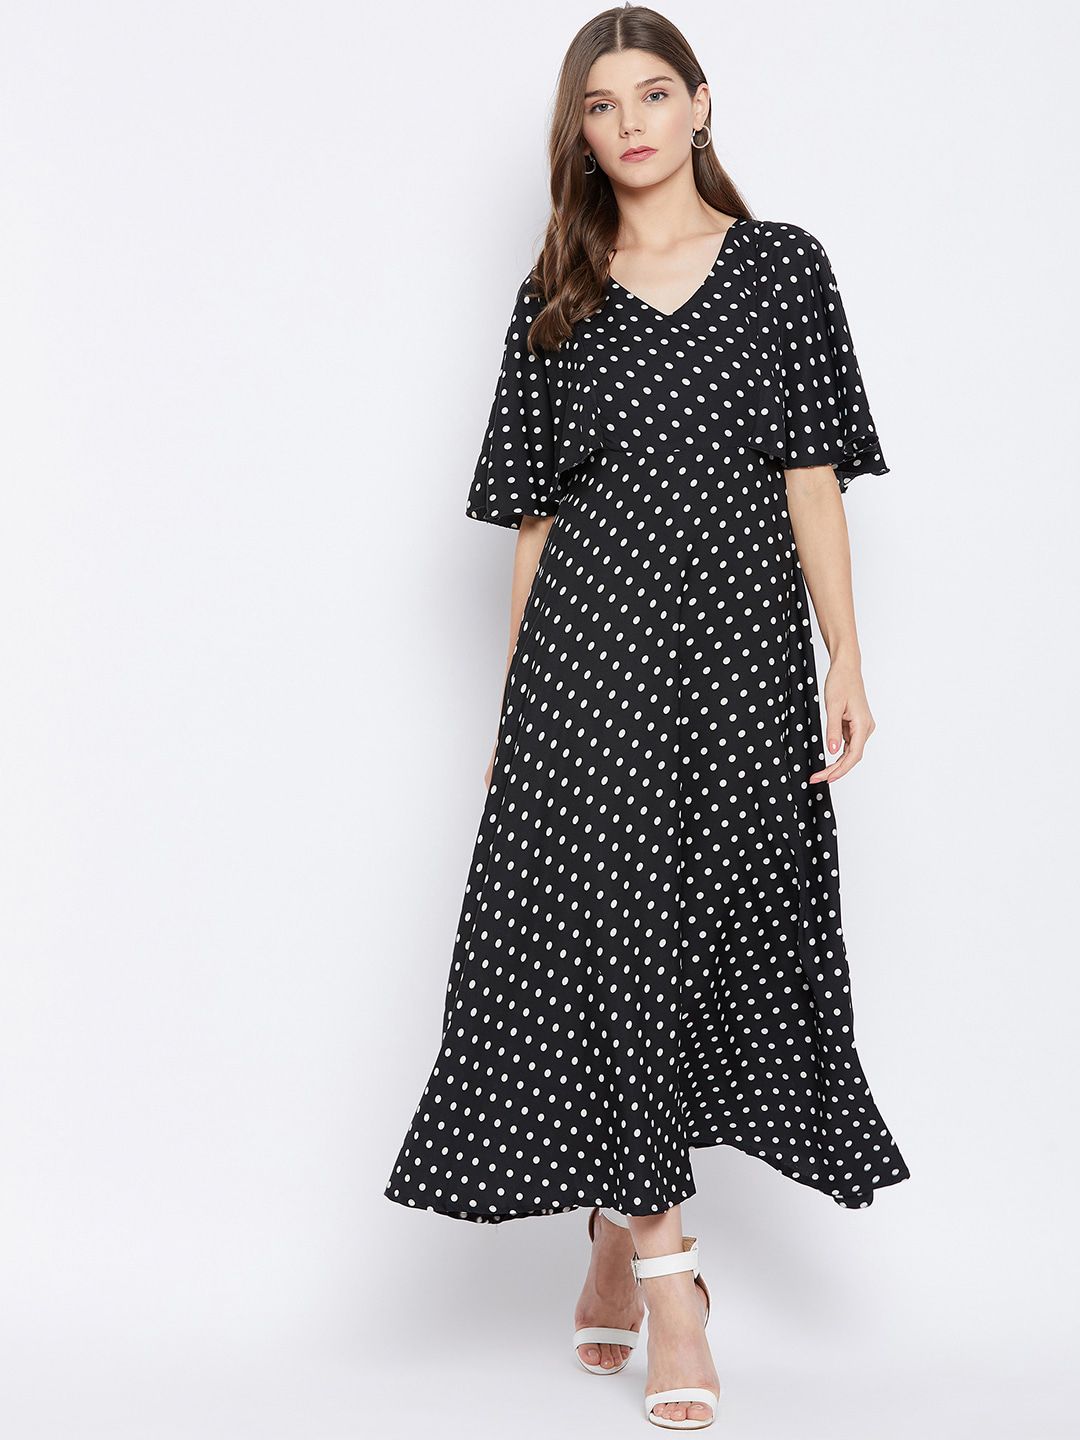 U&F Black Polka Dot Printed Crepe Maxi Dress Price in India